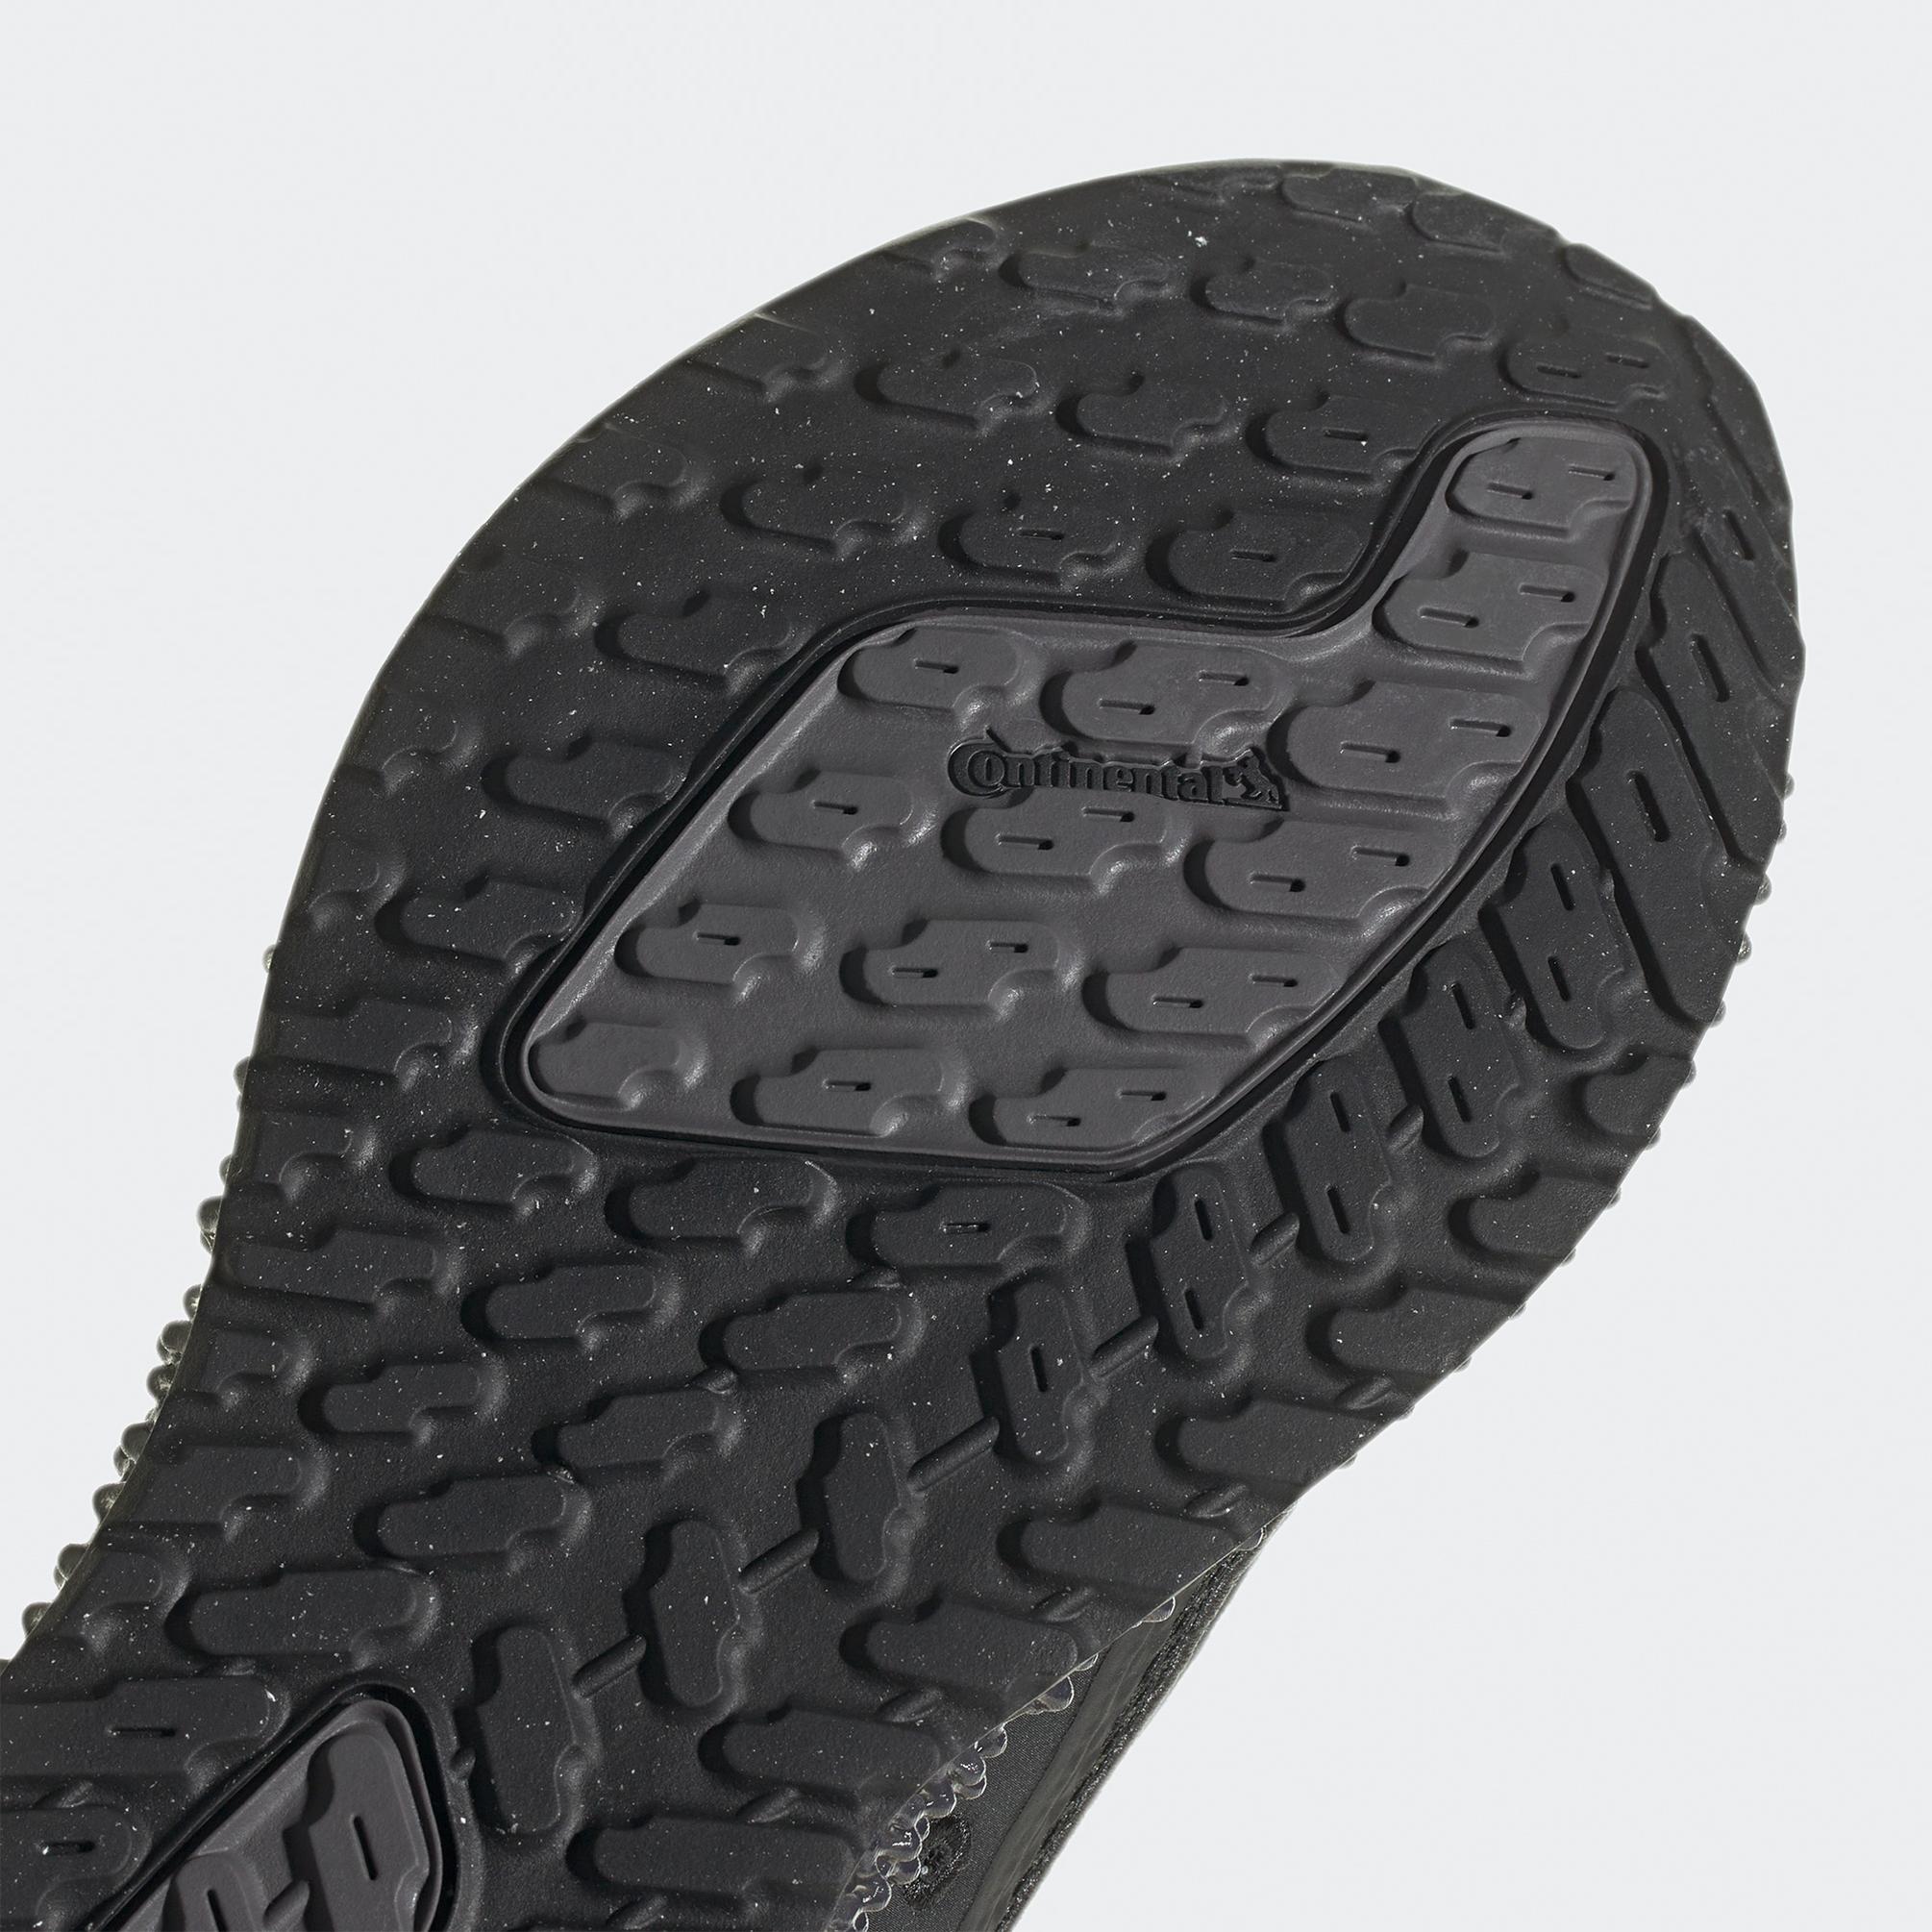  adidas 4Dfwd X Parley Unisex Siyah Spor Ayakkabı